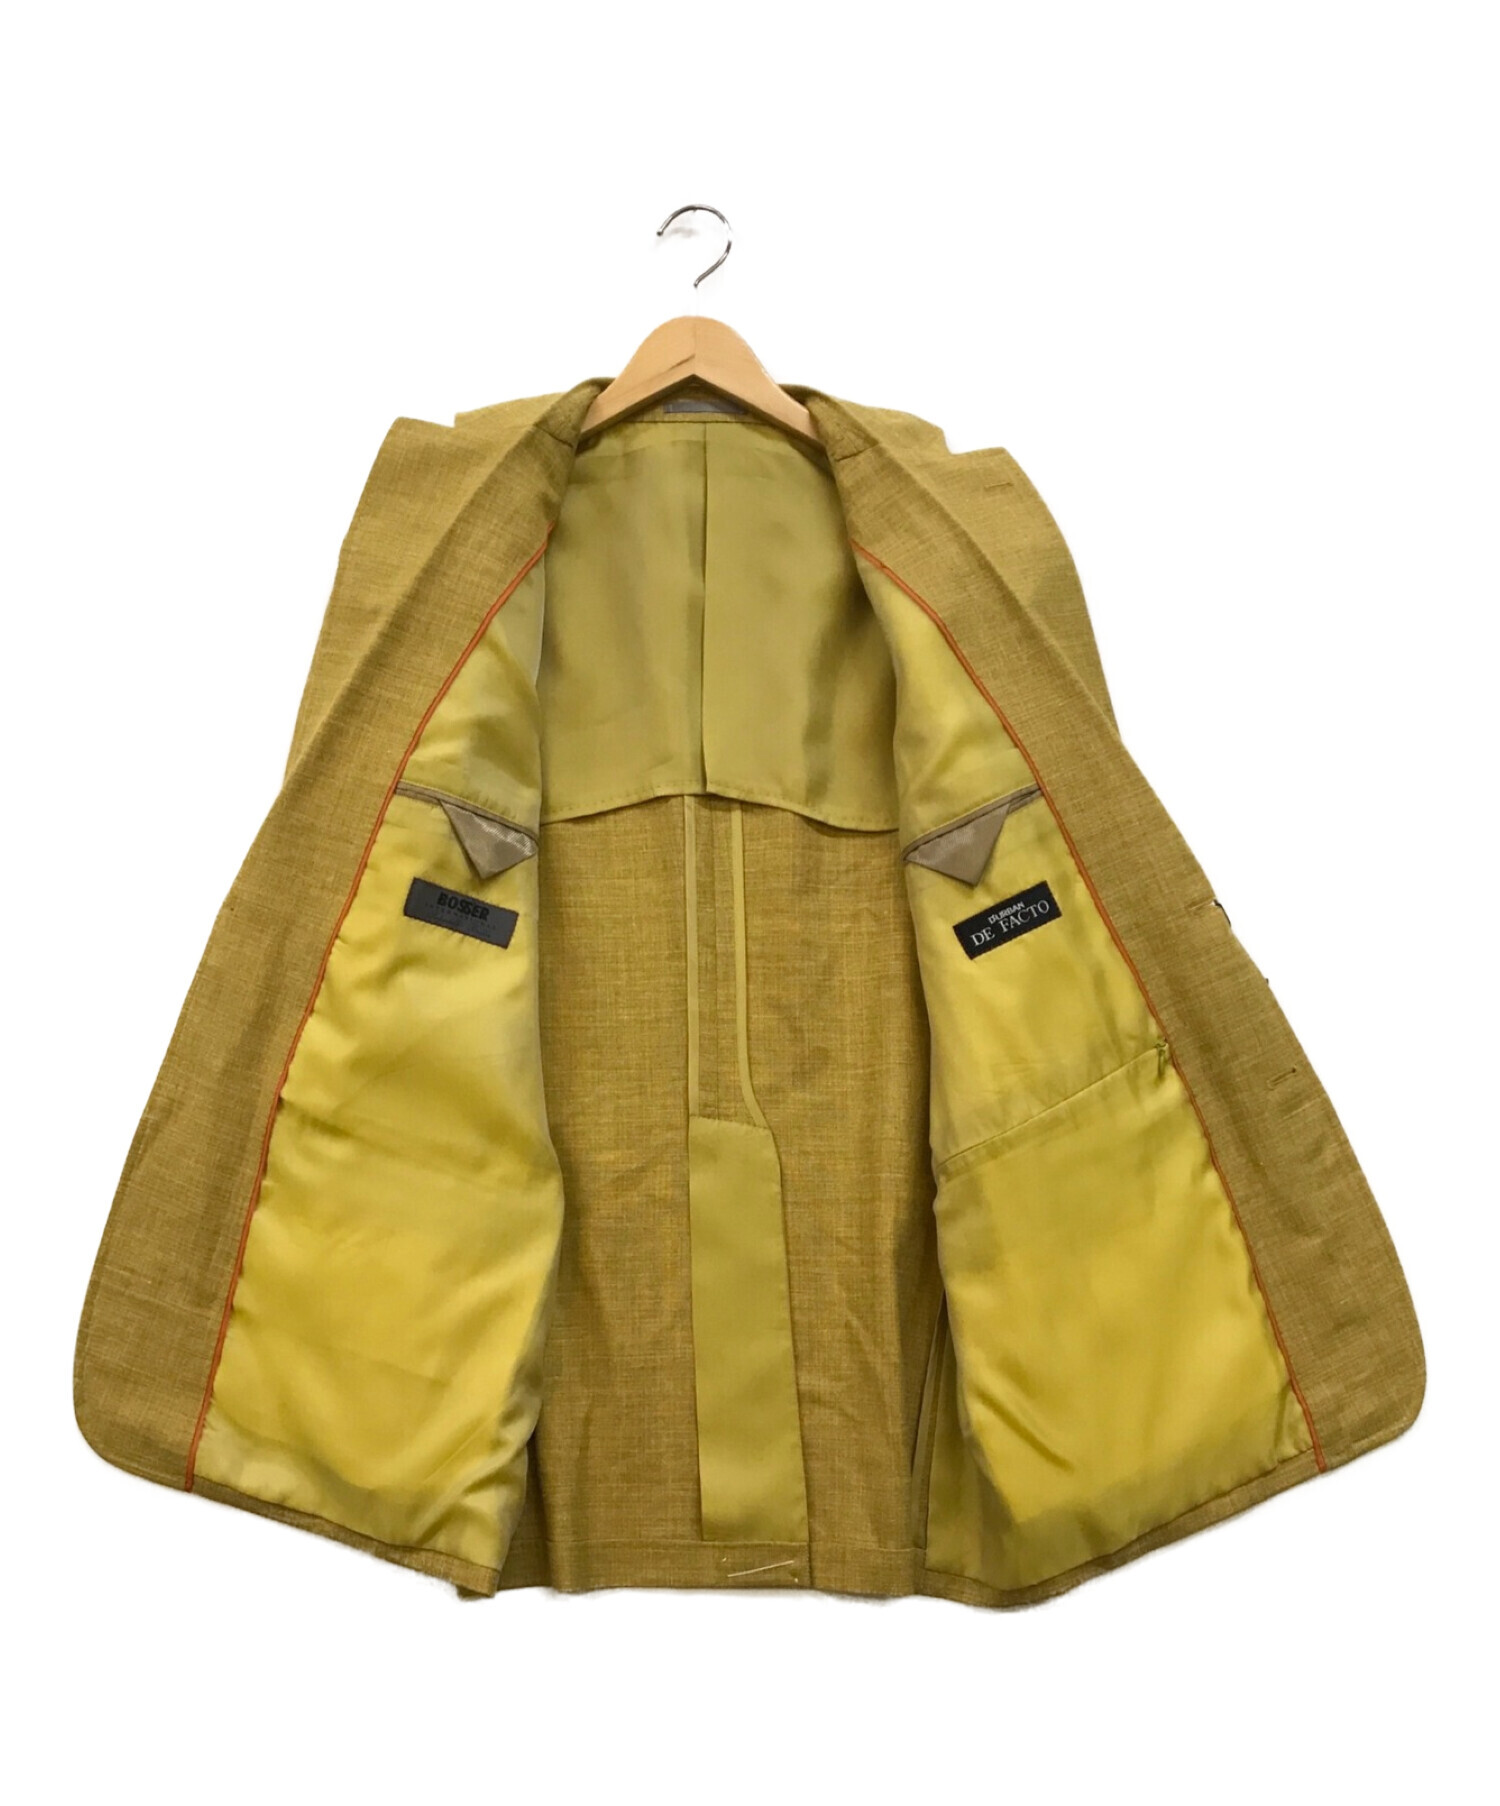 D'URBAN (ダーバン) テーラードジャケット イエロー サイズ:L 未使用品